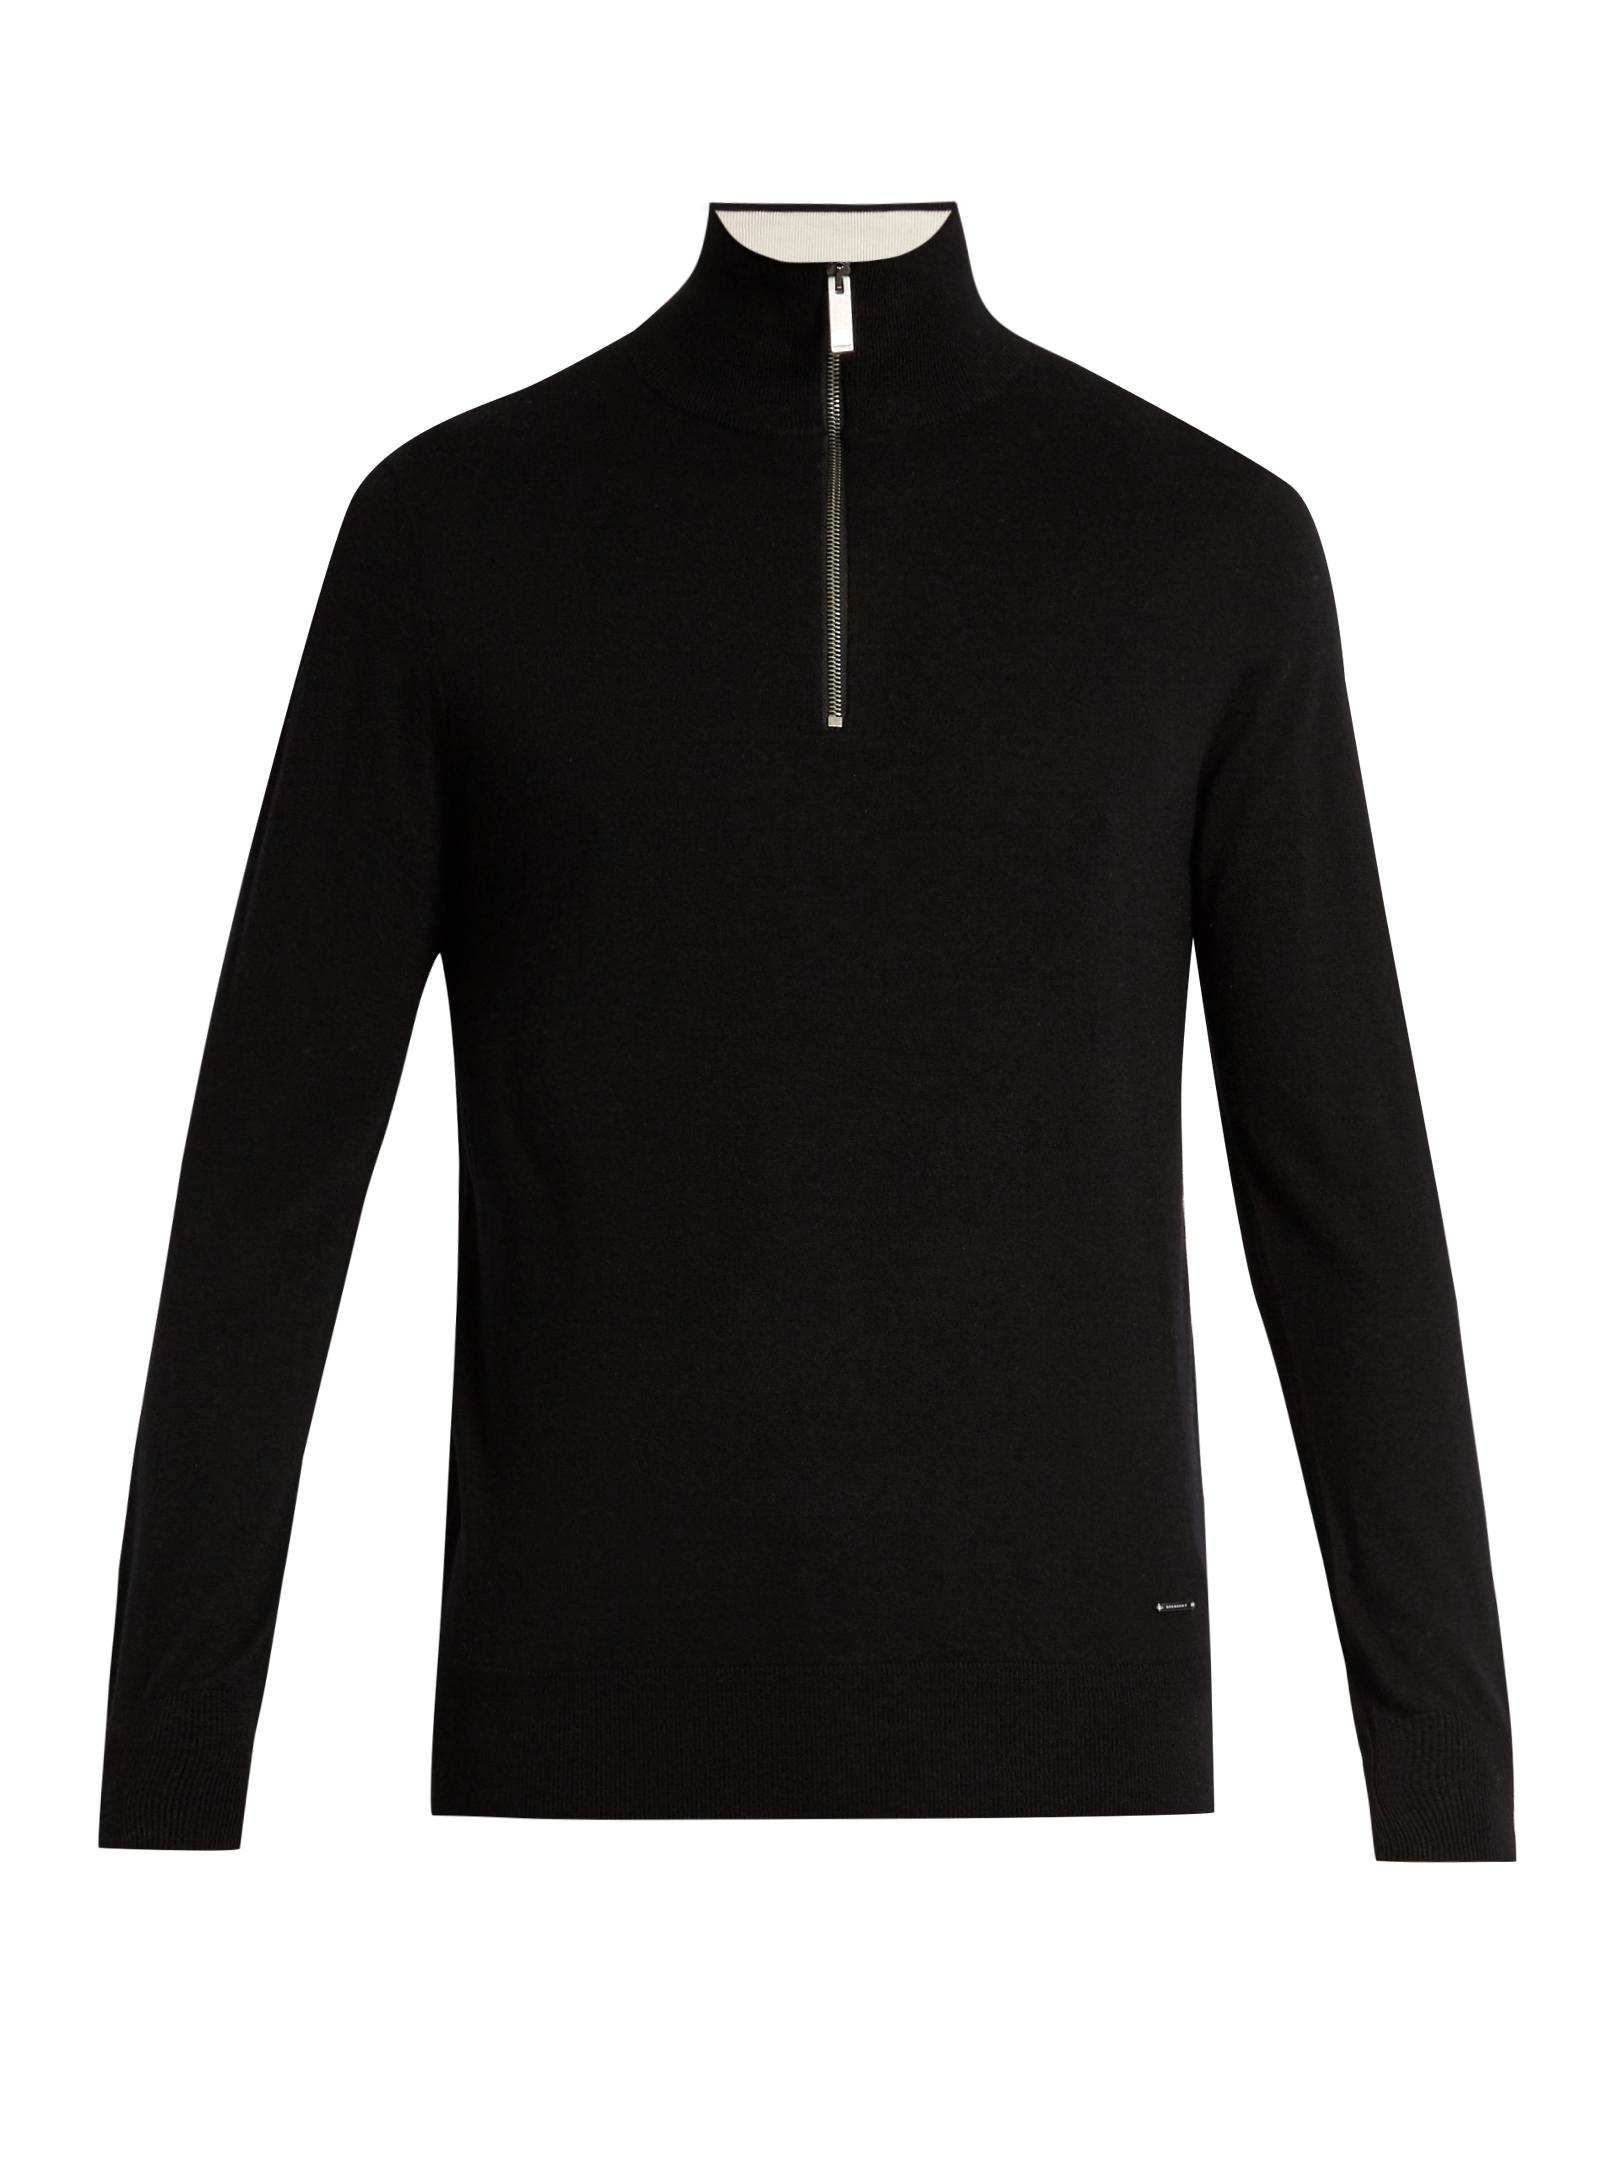 Download Lyst - Burberry Half-zip Cashmere Sweater in Black for Men